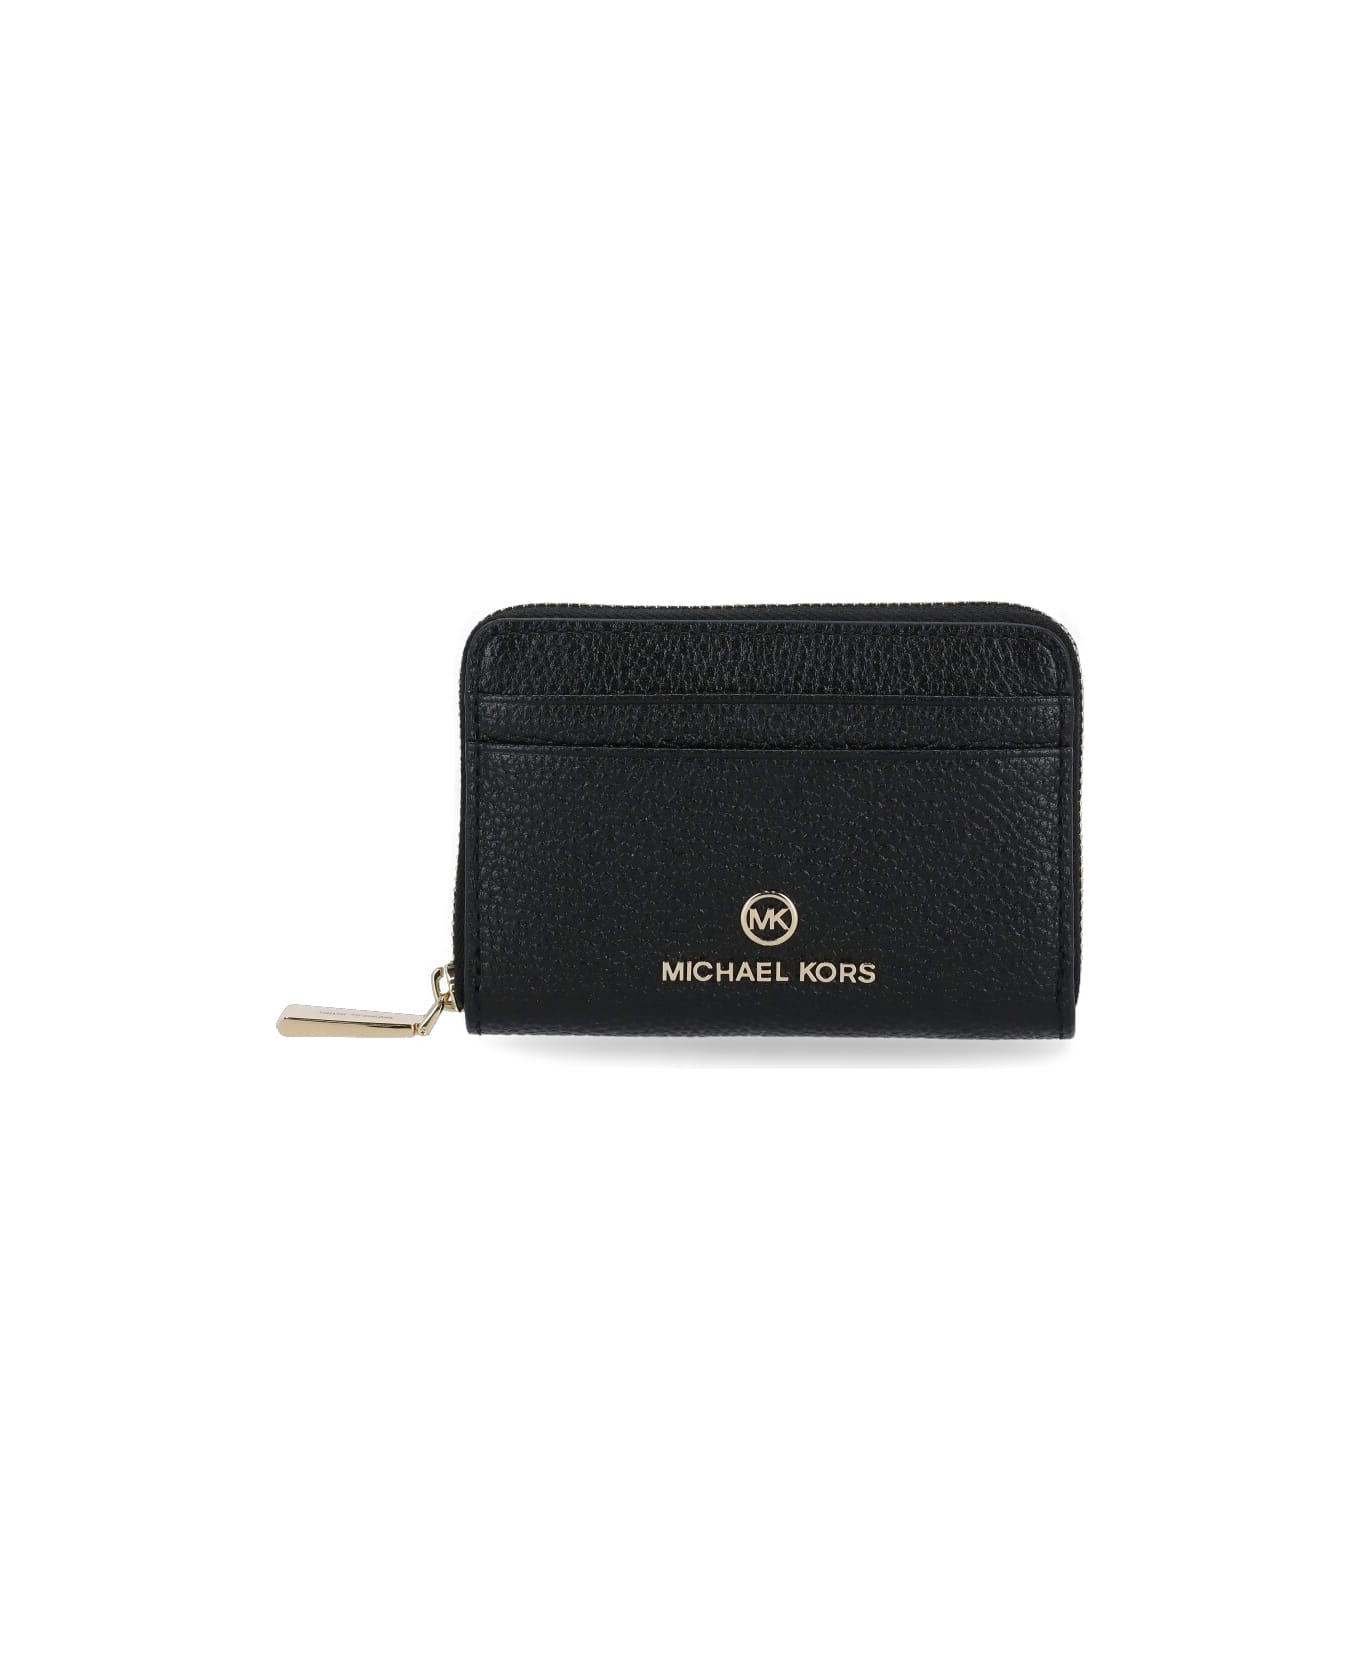 Michael Kors Grainy Leather Wallet - BLACK